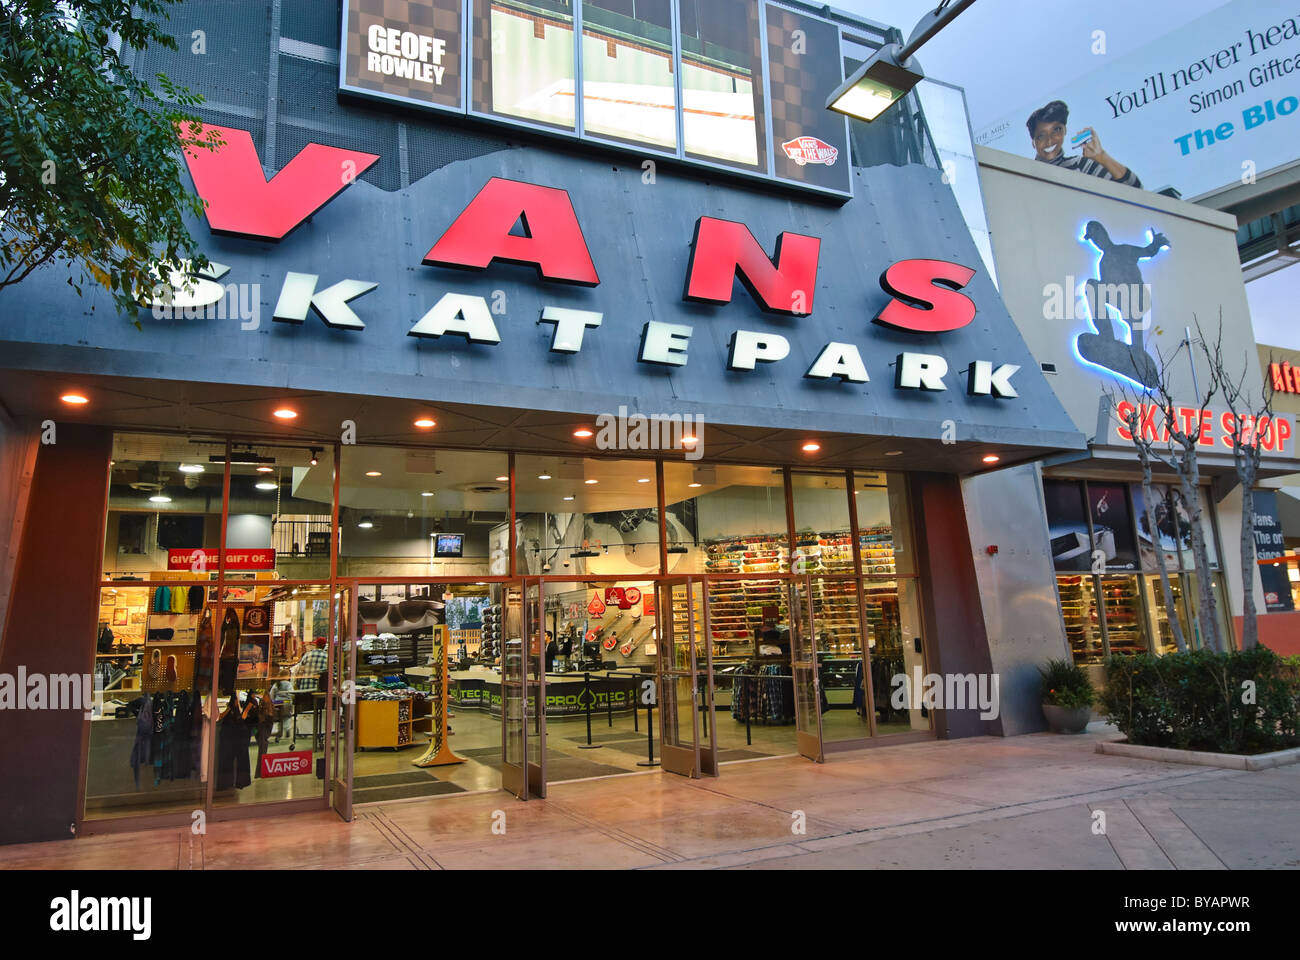 Vans skatepark and adjacent skate themed retail stores Stock Photo - Alamy